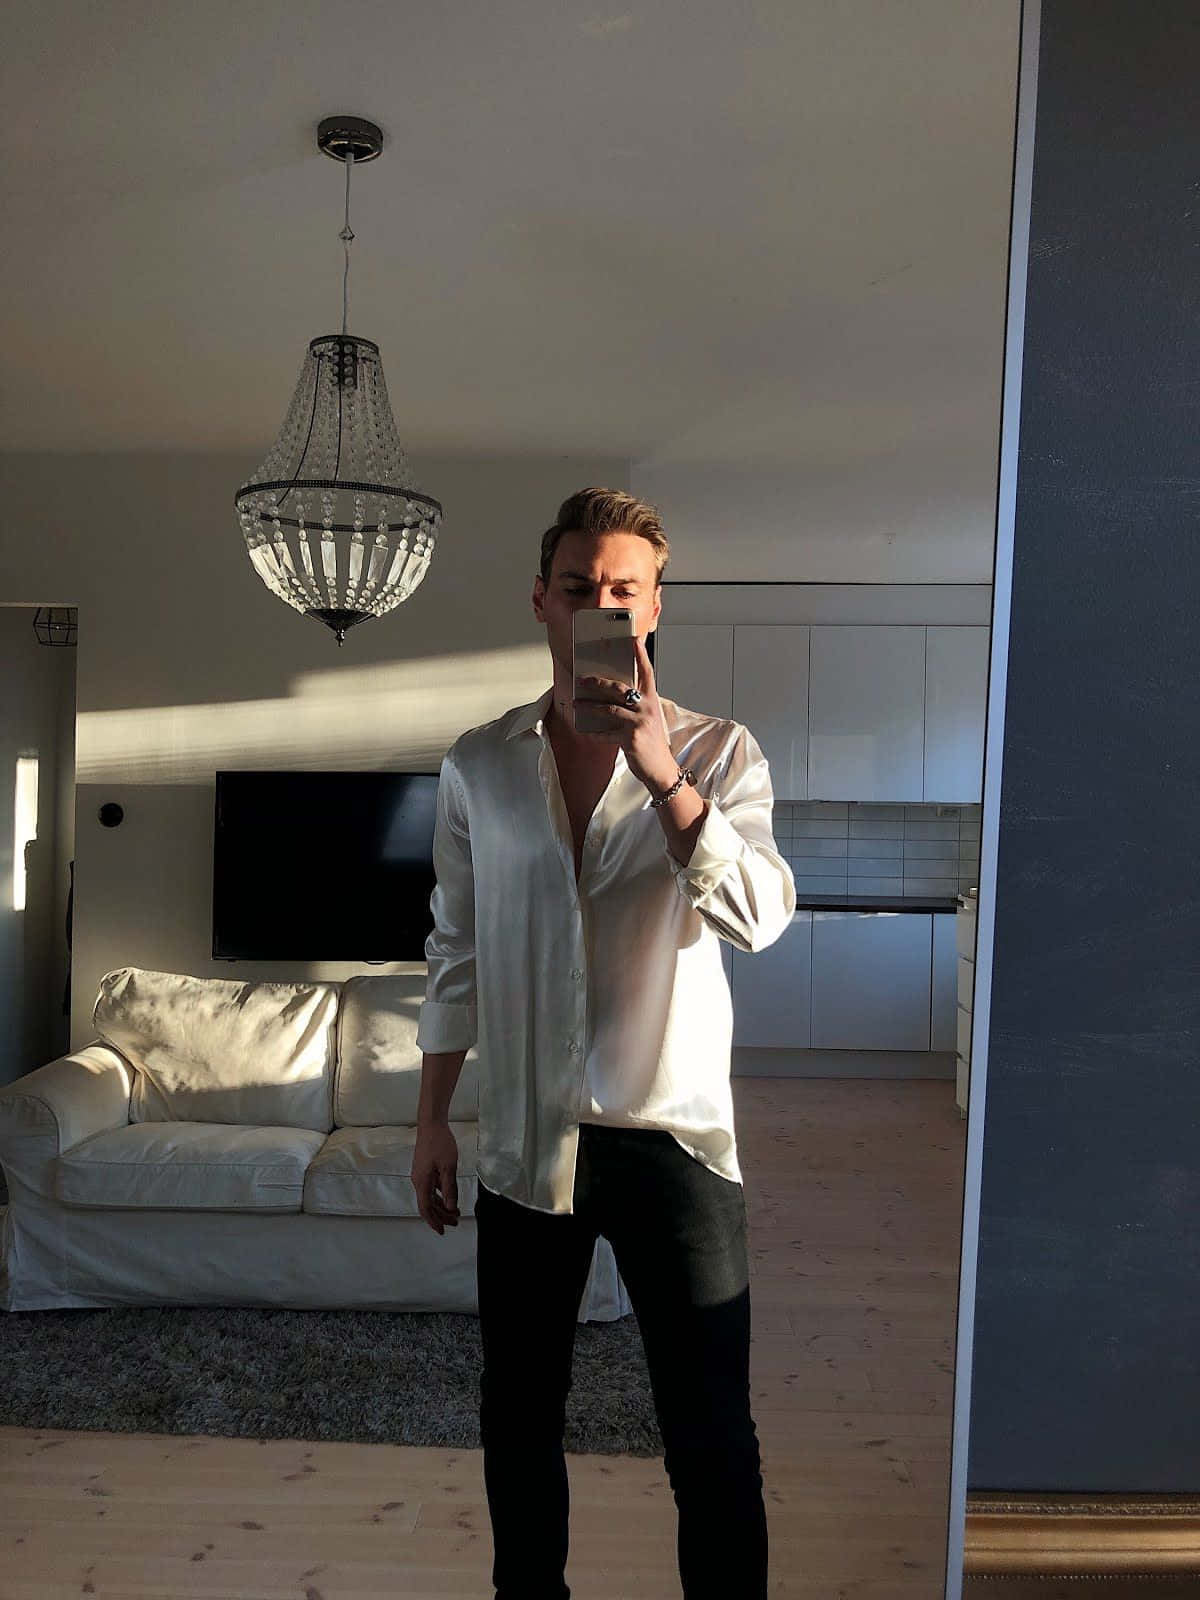 Long Mirror Selfie Man Picture